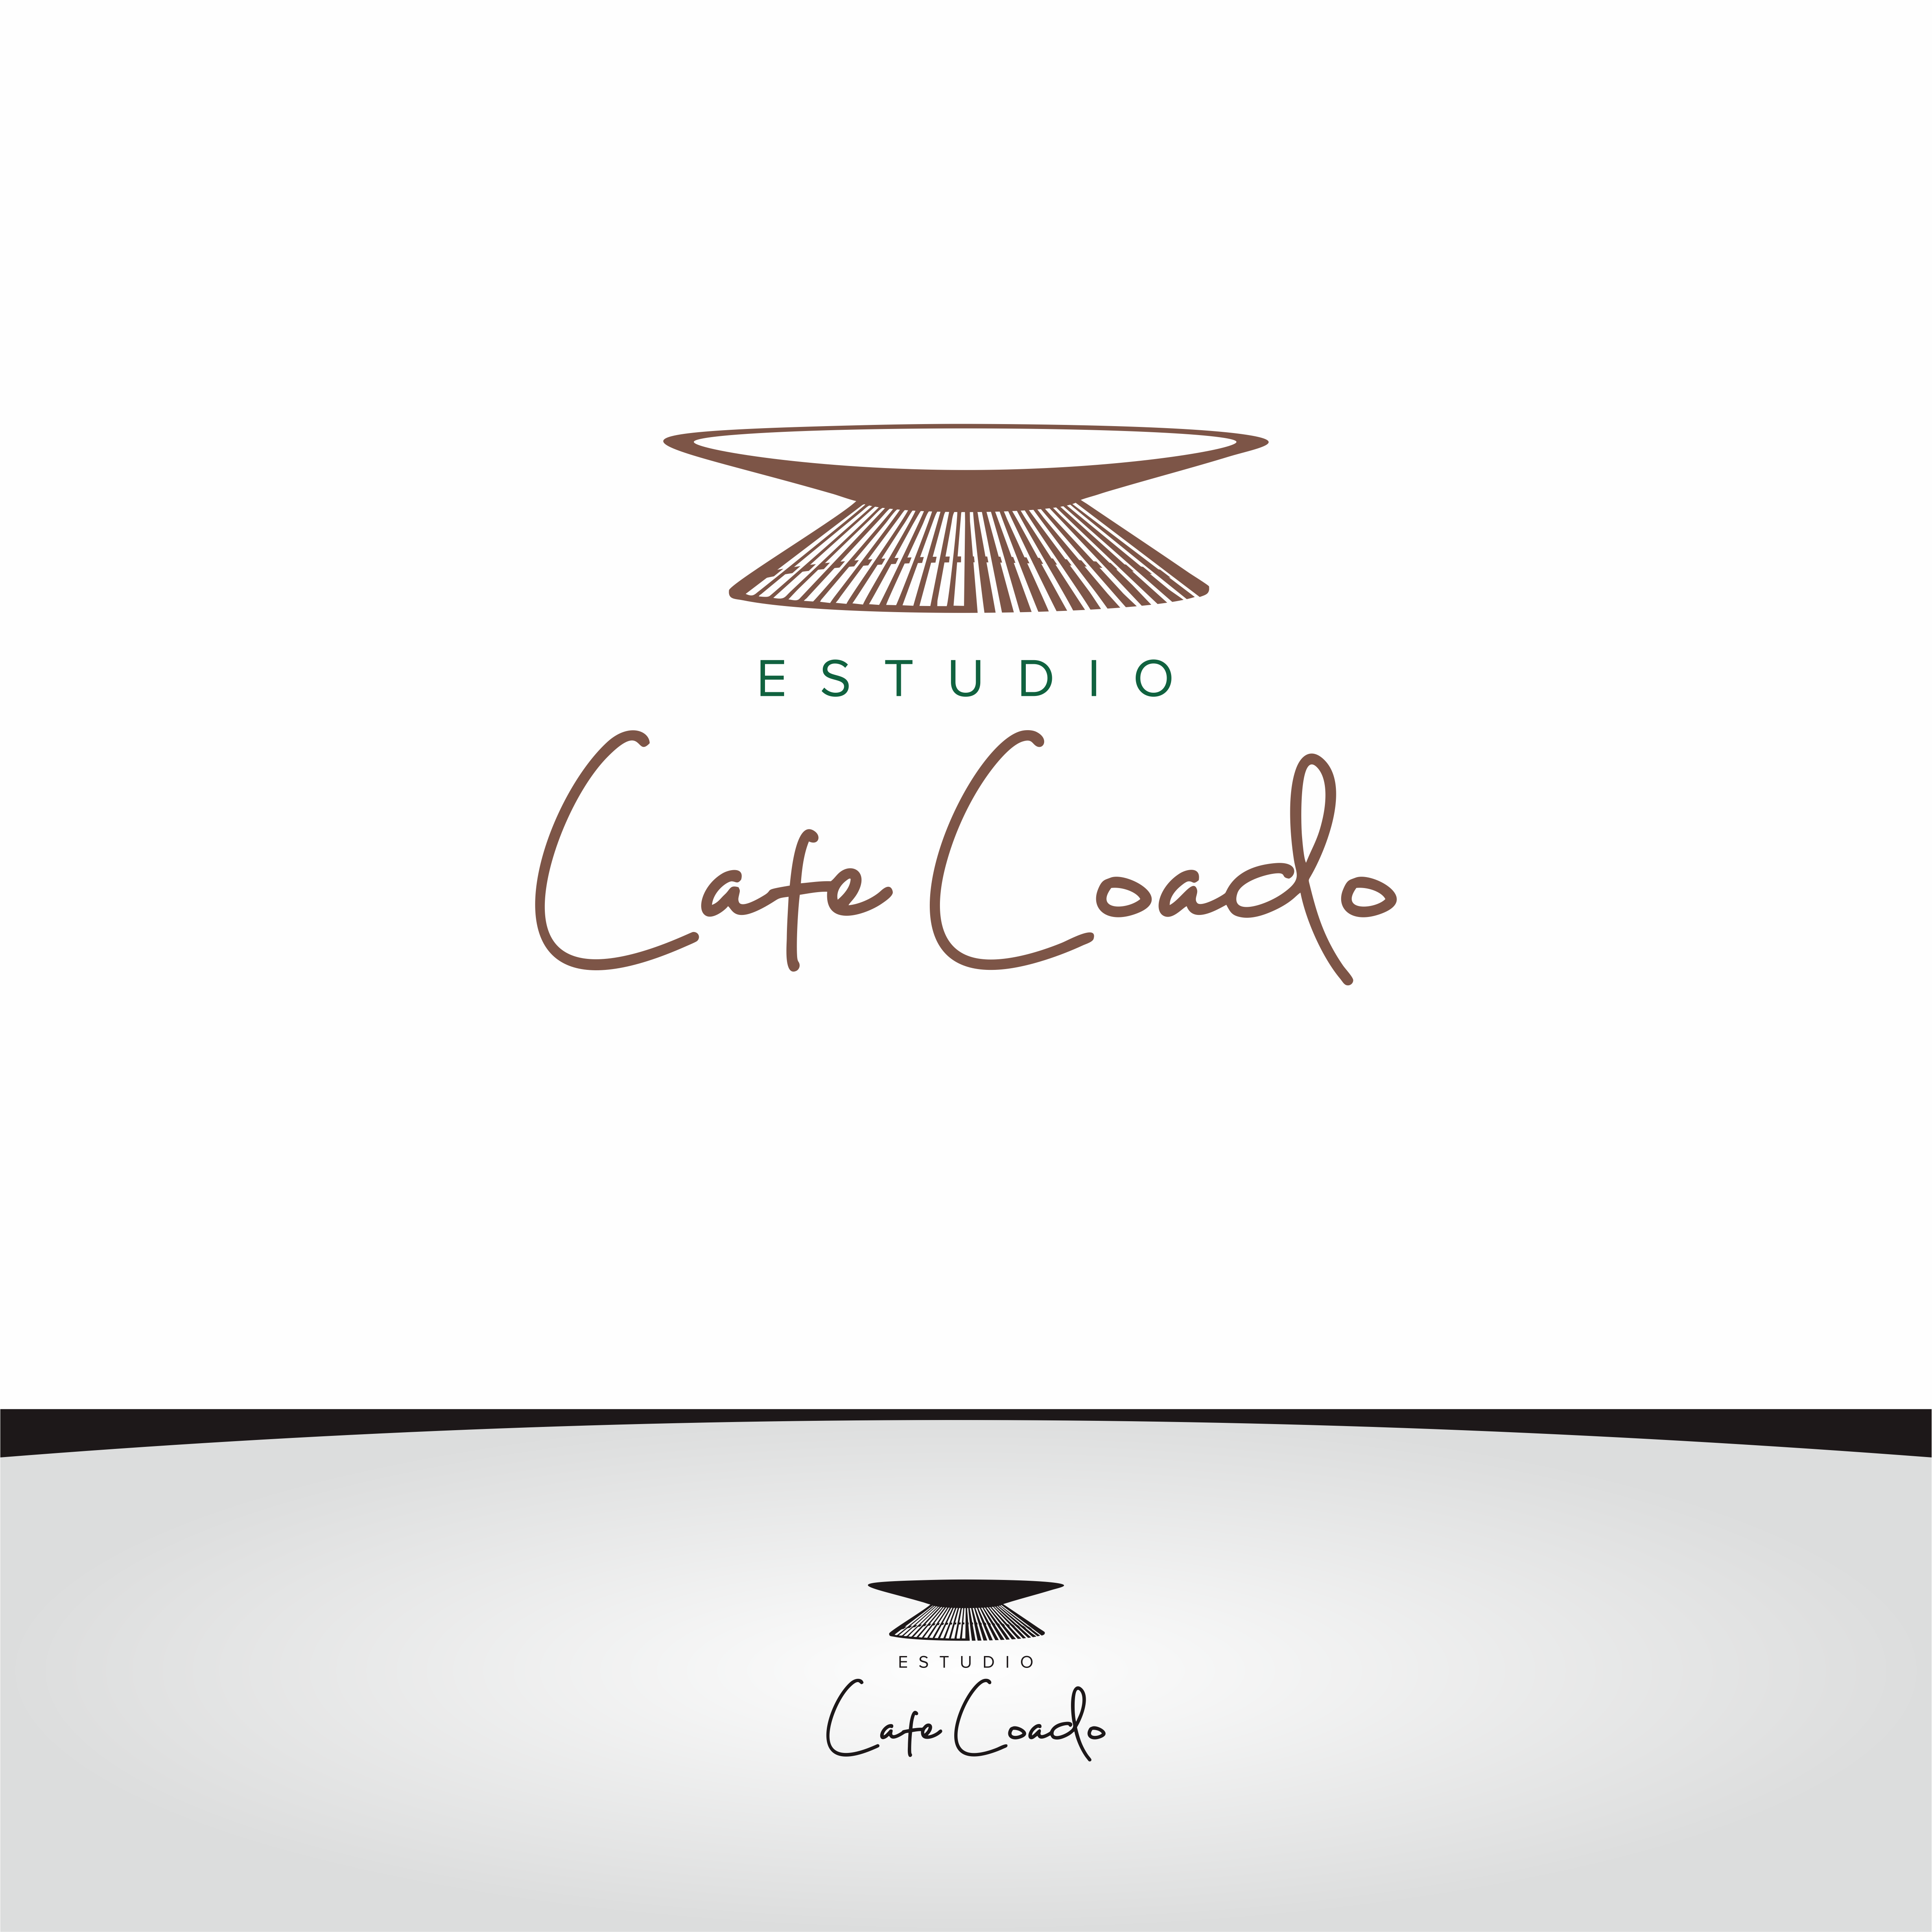 Logo Design entry 1943410 submitted by makrufi to the Logo Design for Estúdio Café Coado run by Camila